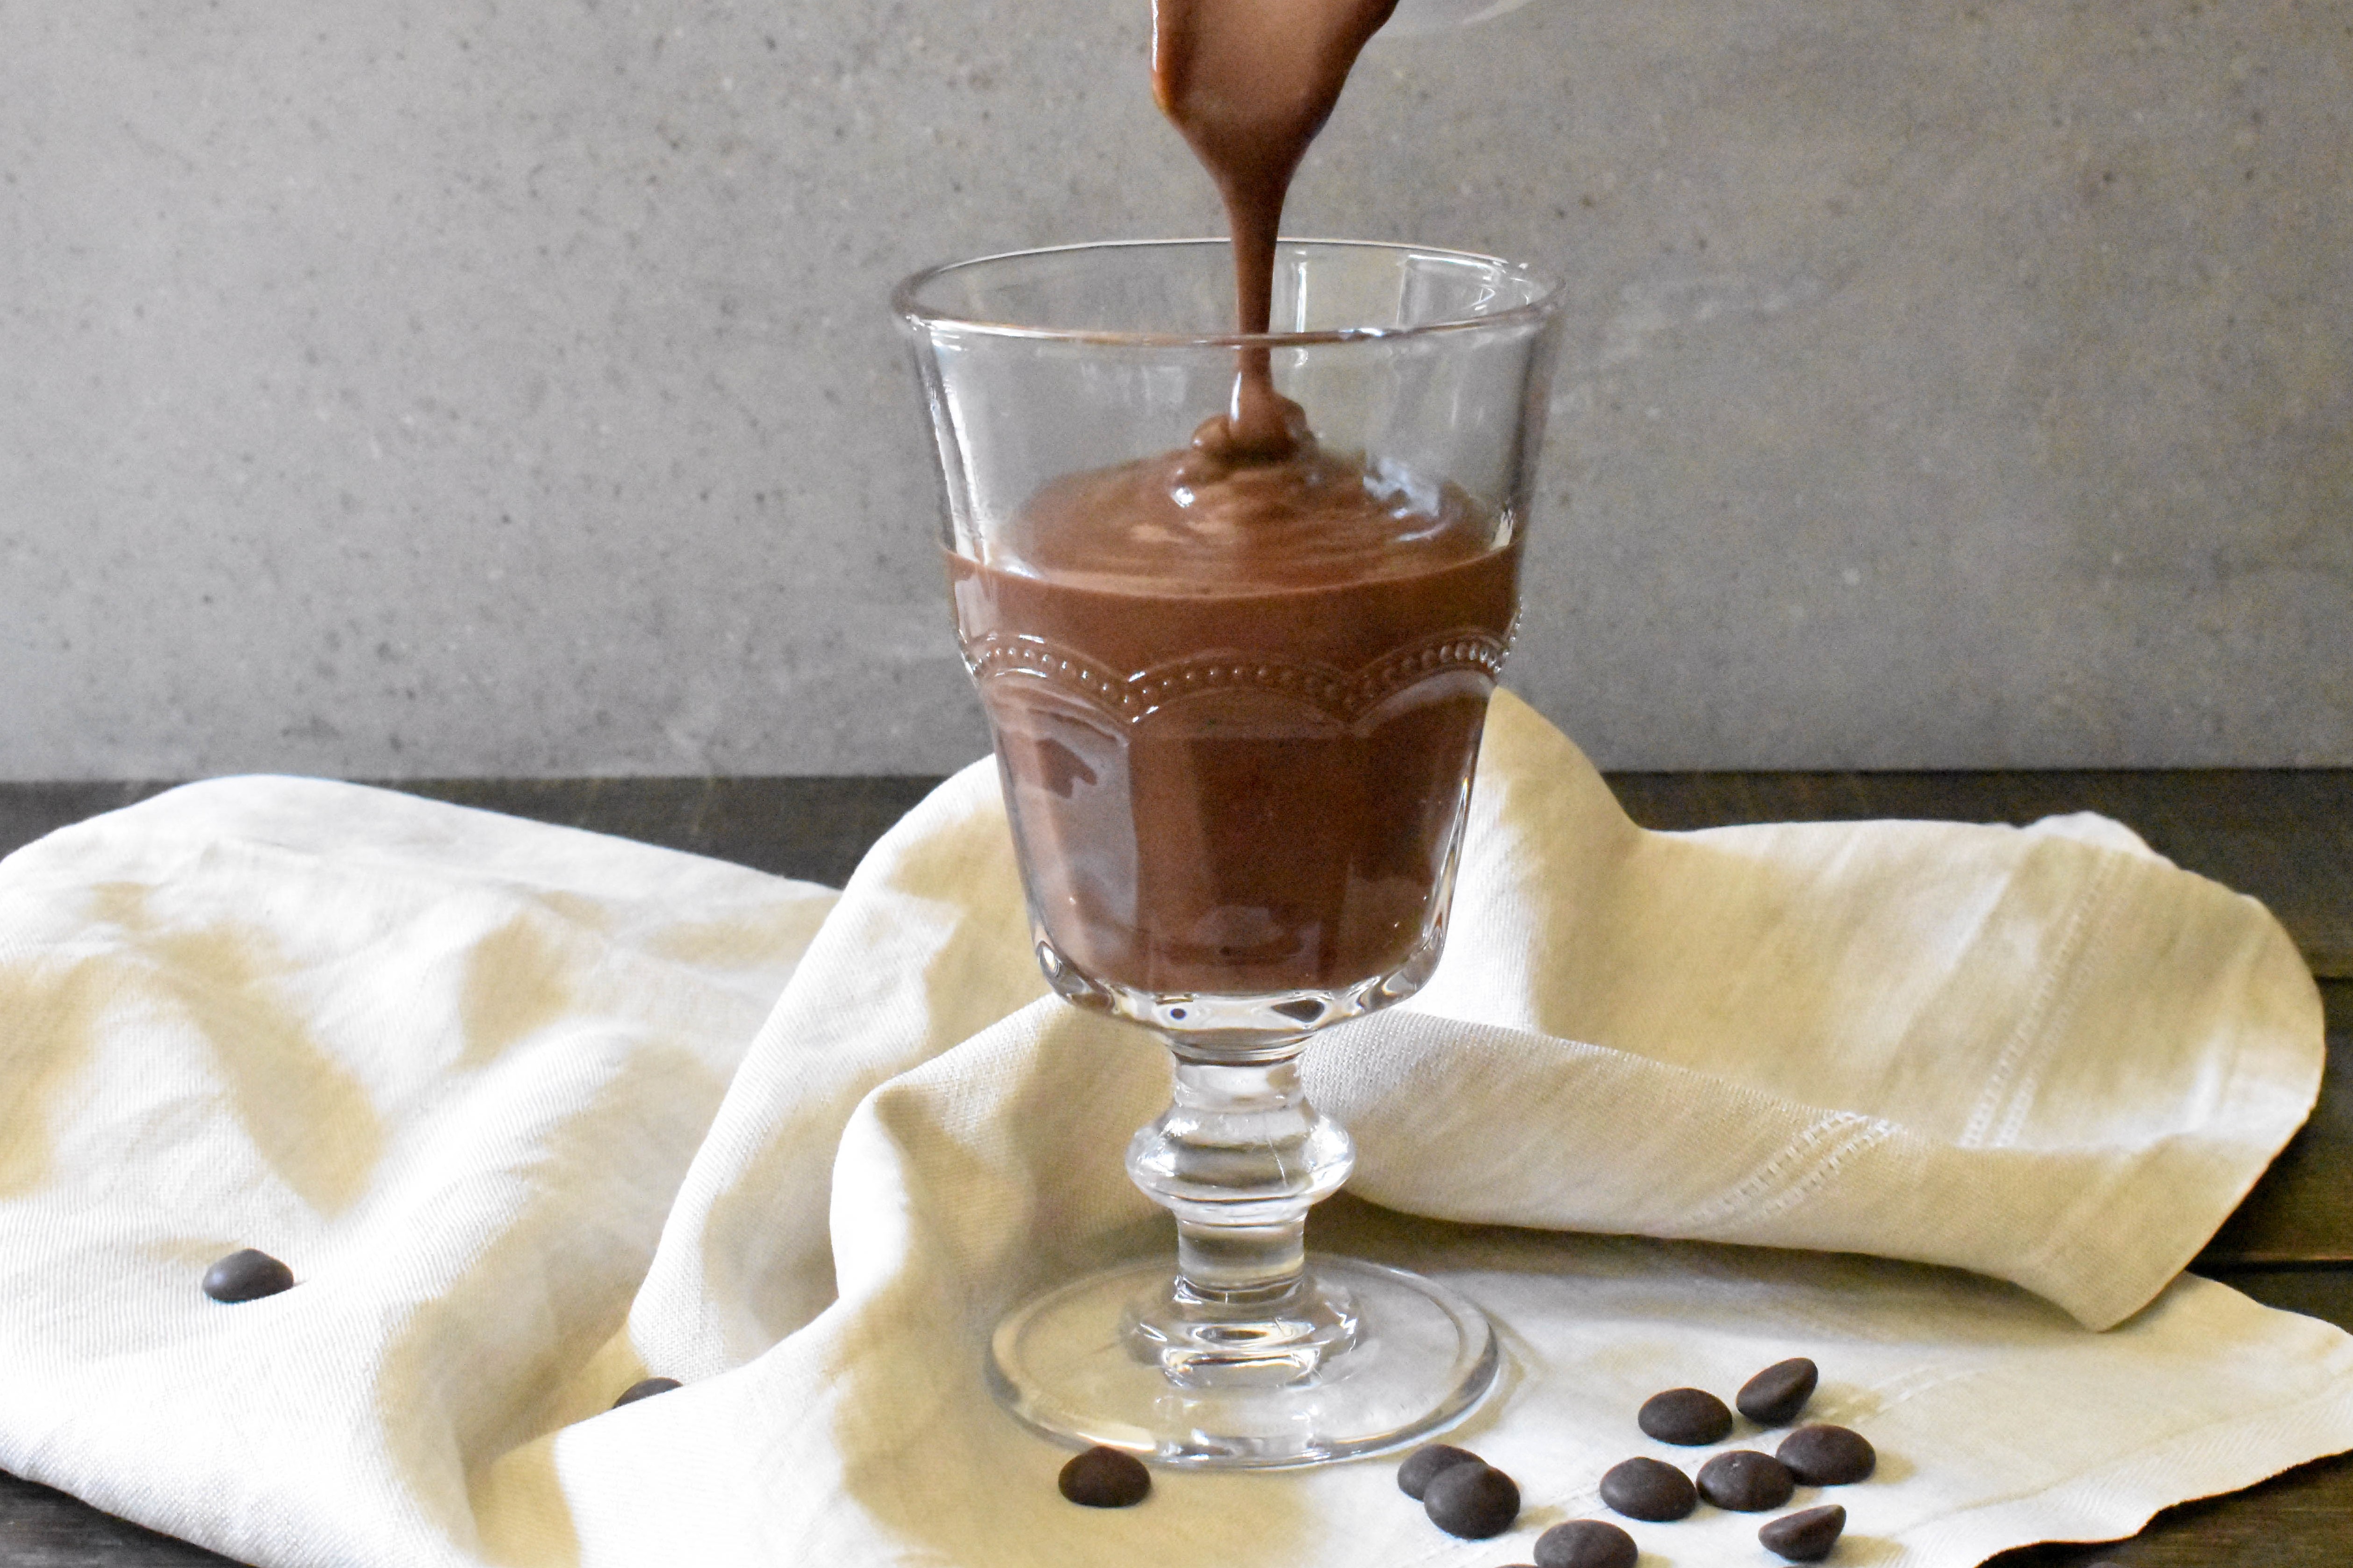 Rich cioccolata calda (Italian hot chocolate) - Italian Spoon